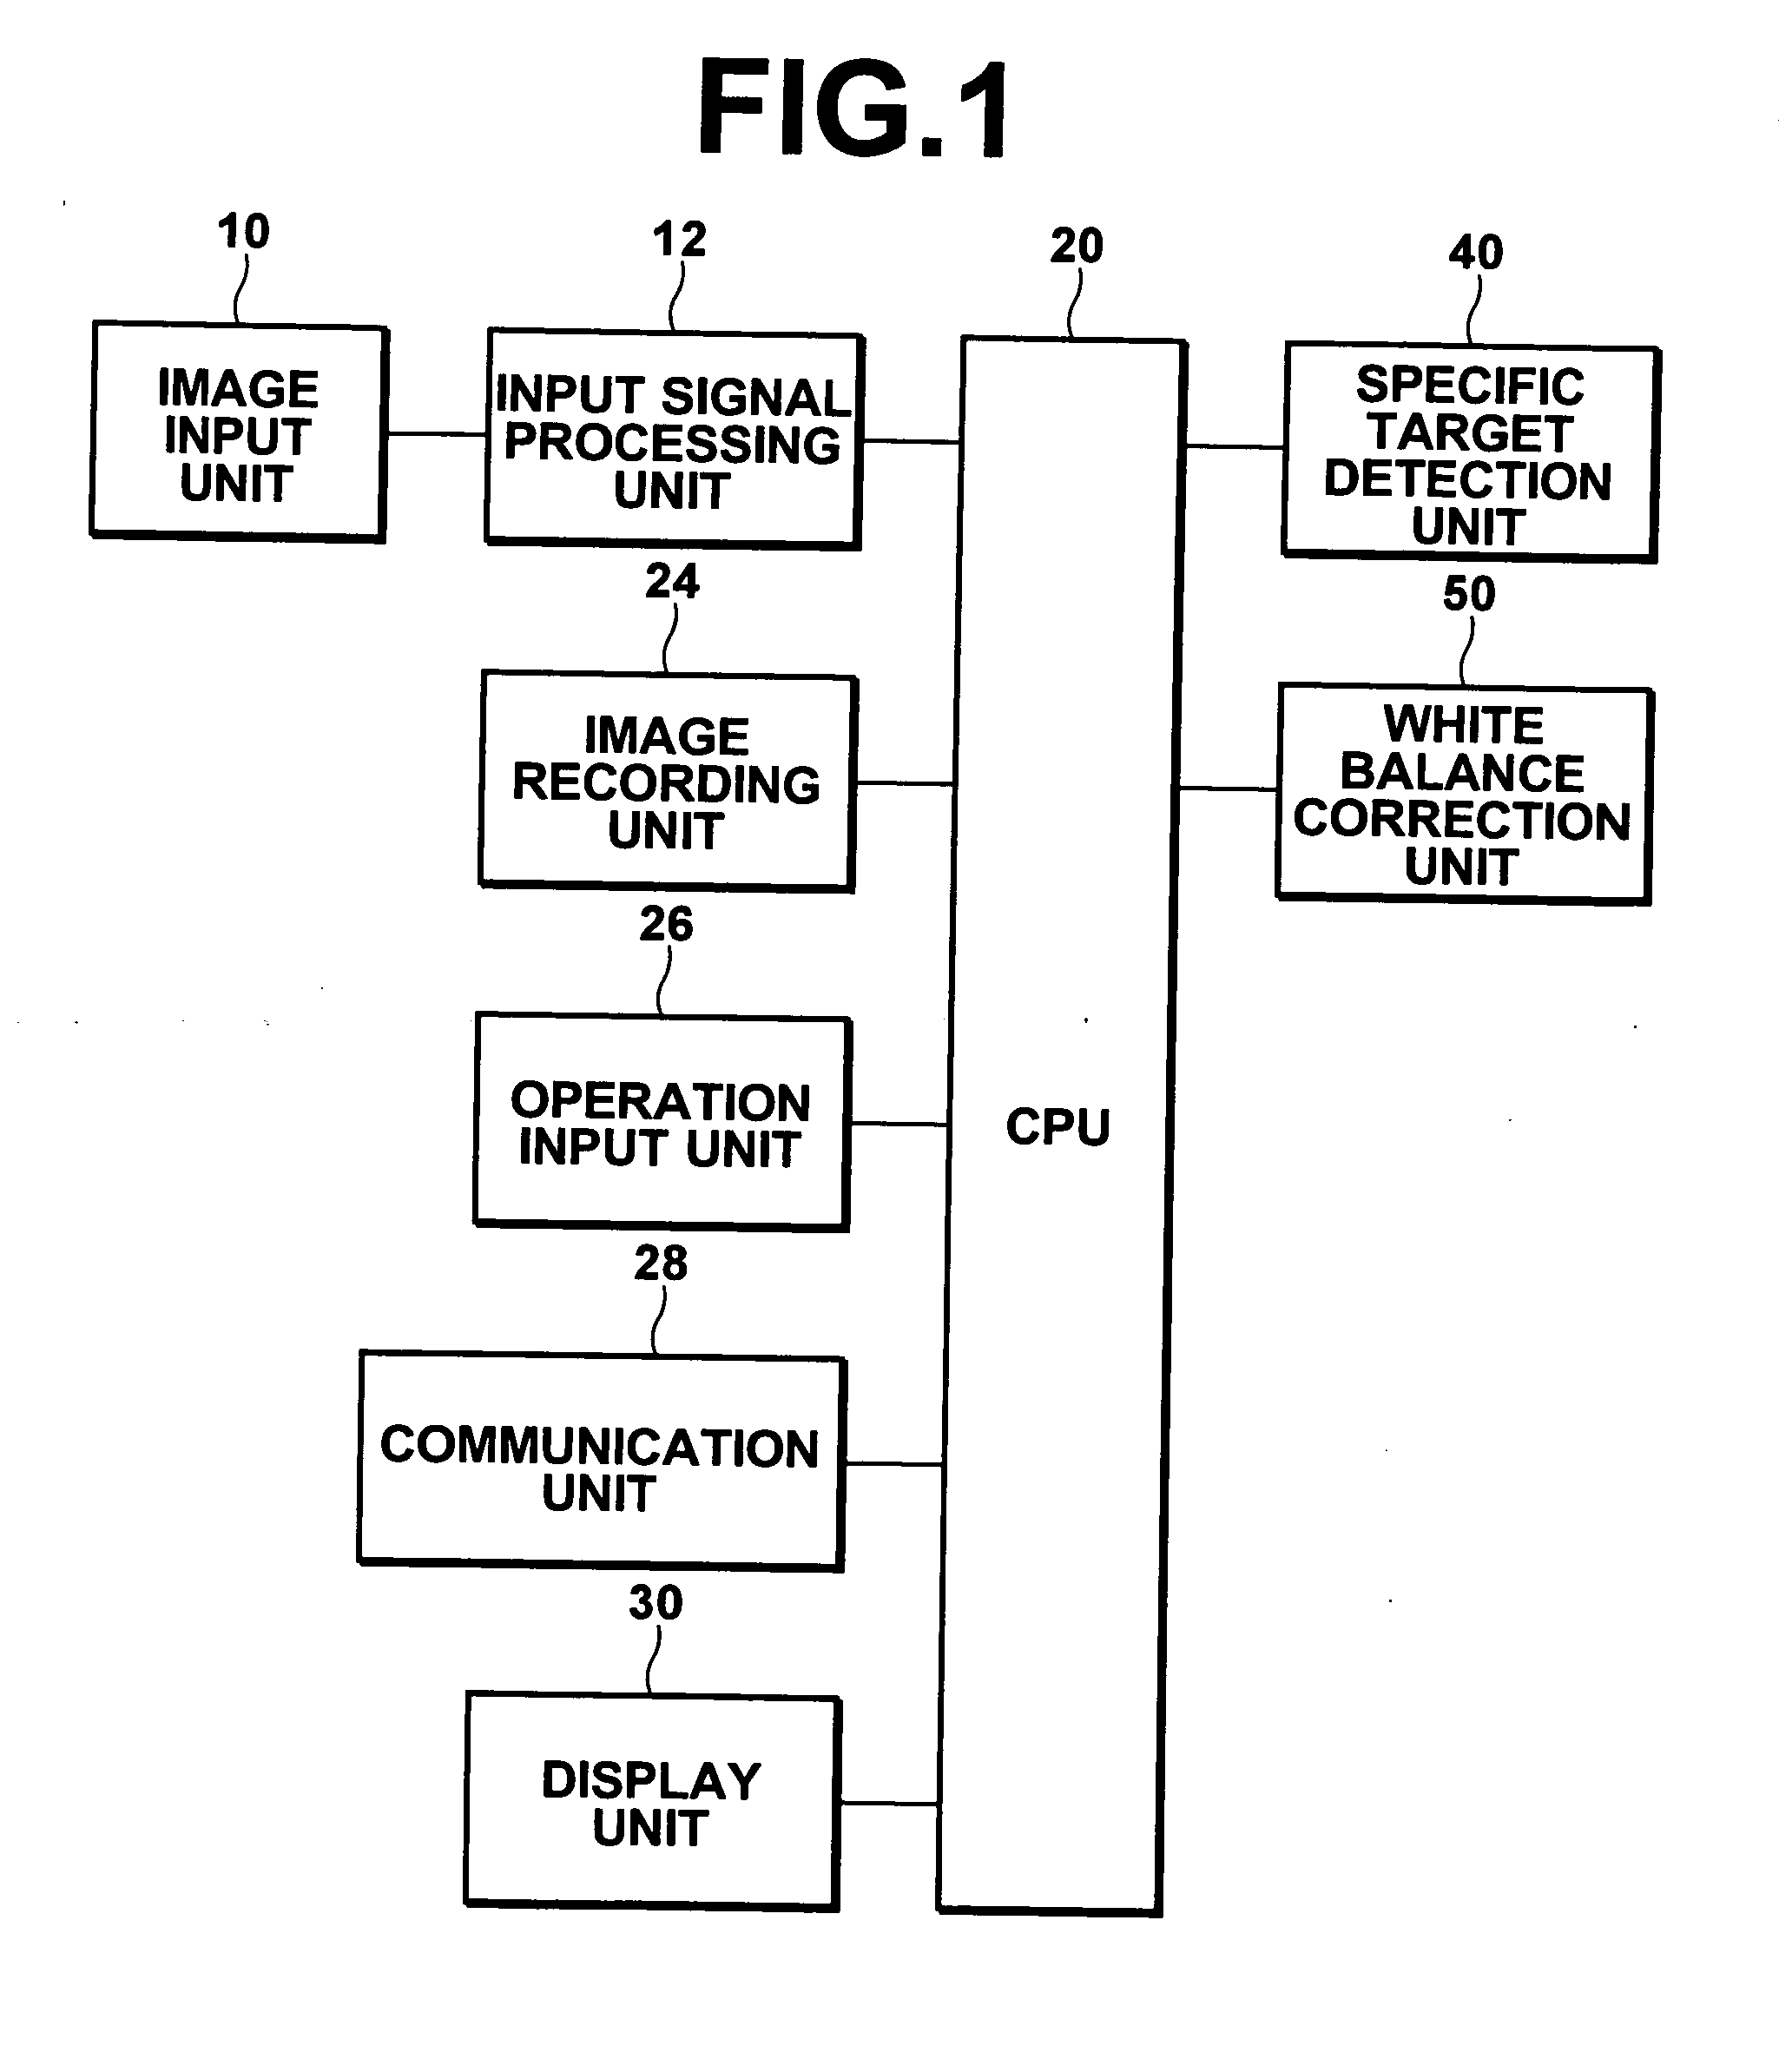 White balance correction apparatus and method